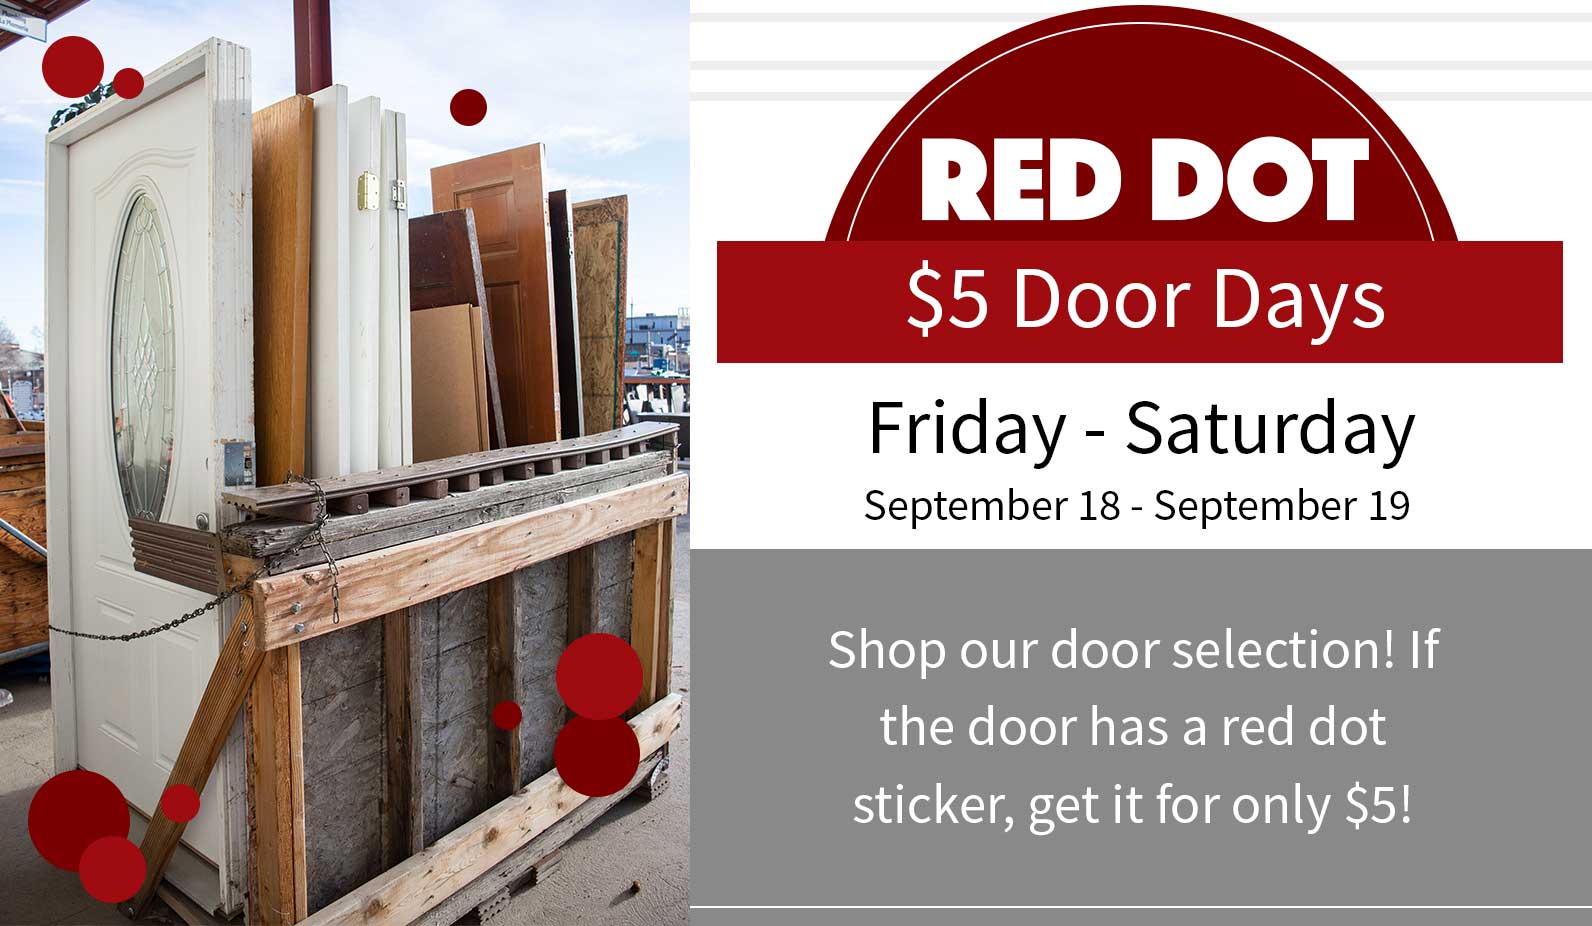 Red Dot $5 Dollar Door Days Graphic - Description of sale in text.